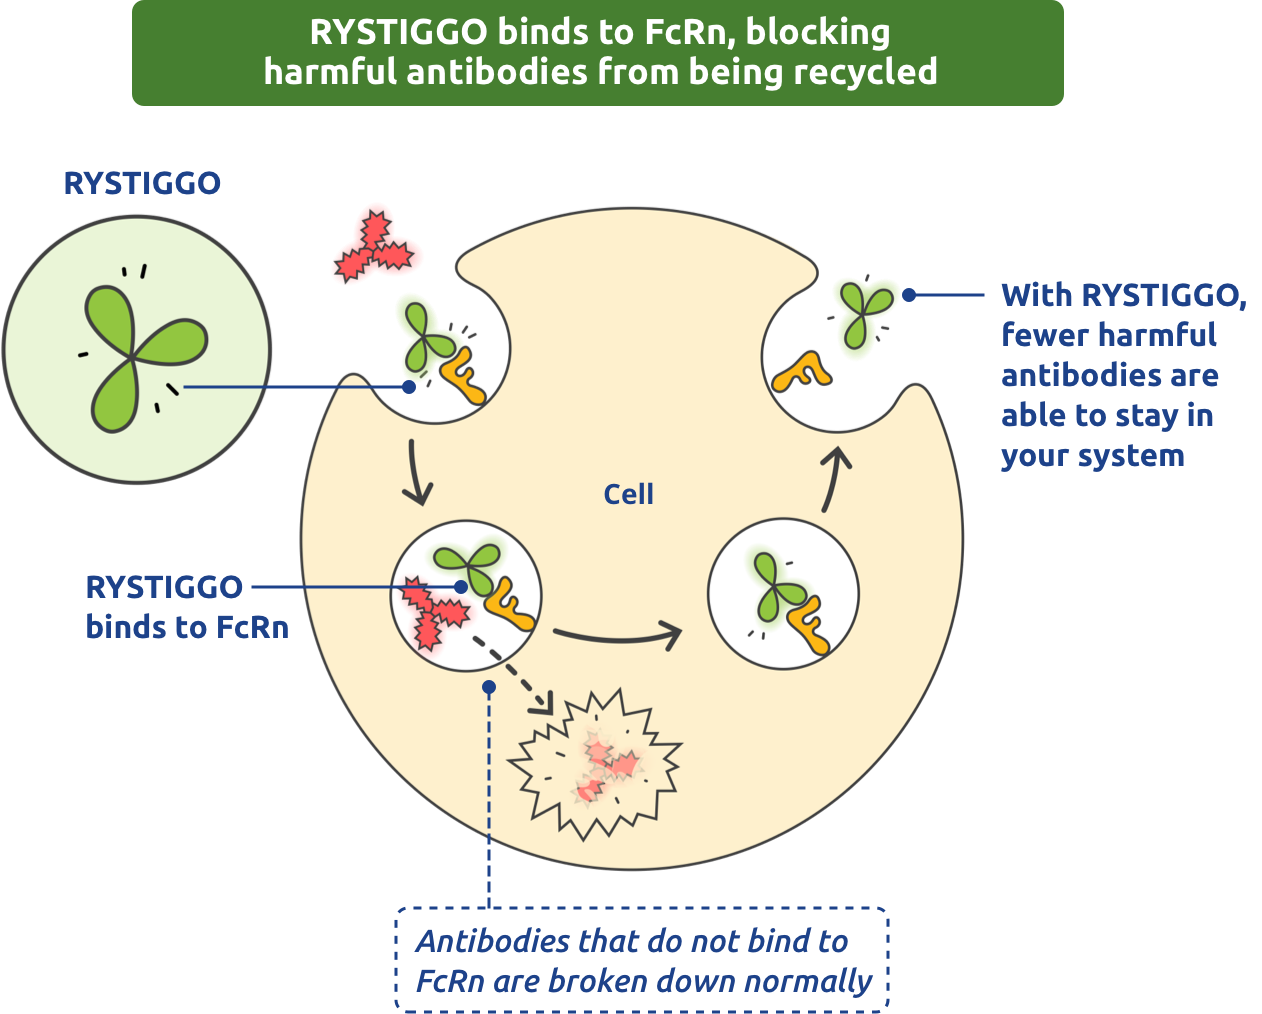 RYSTIGGO binds to FcRn, blocking harmful antibodies from being recycled.